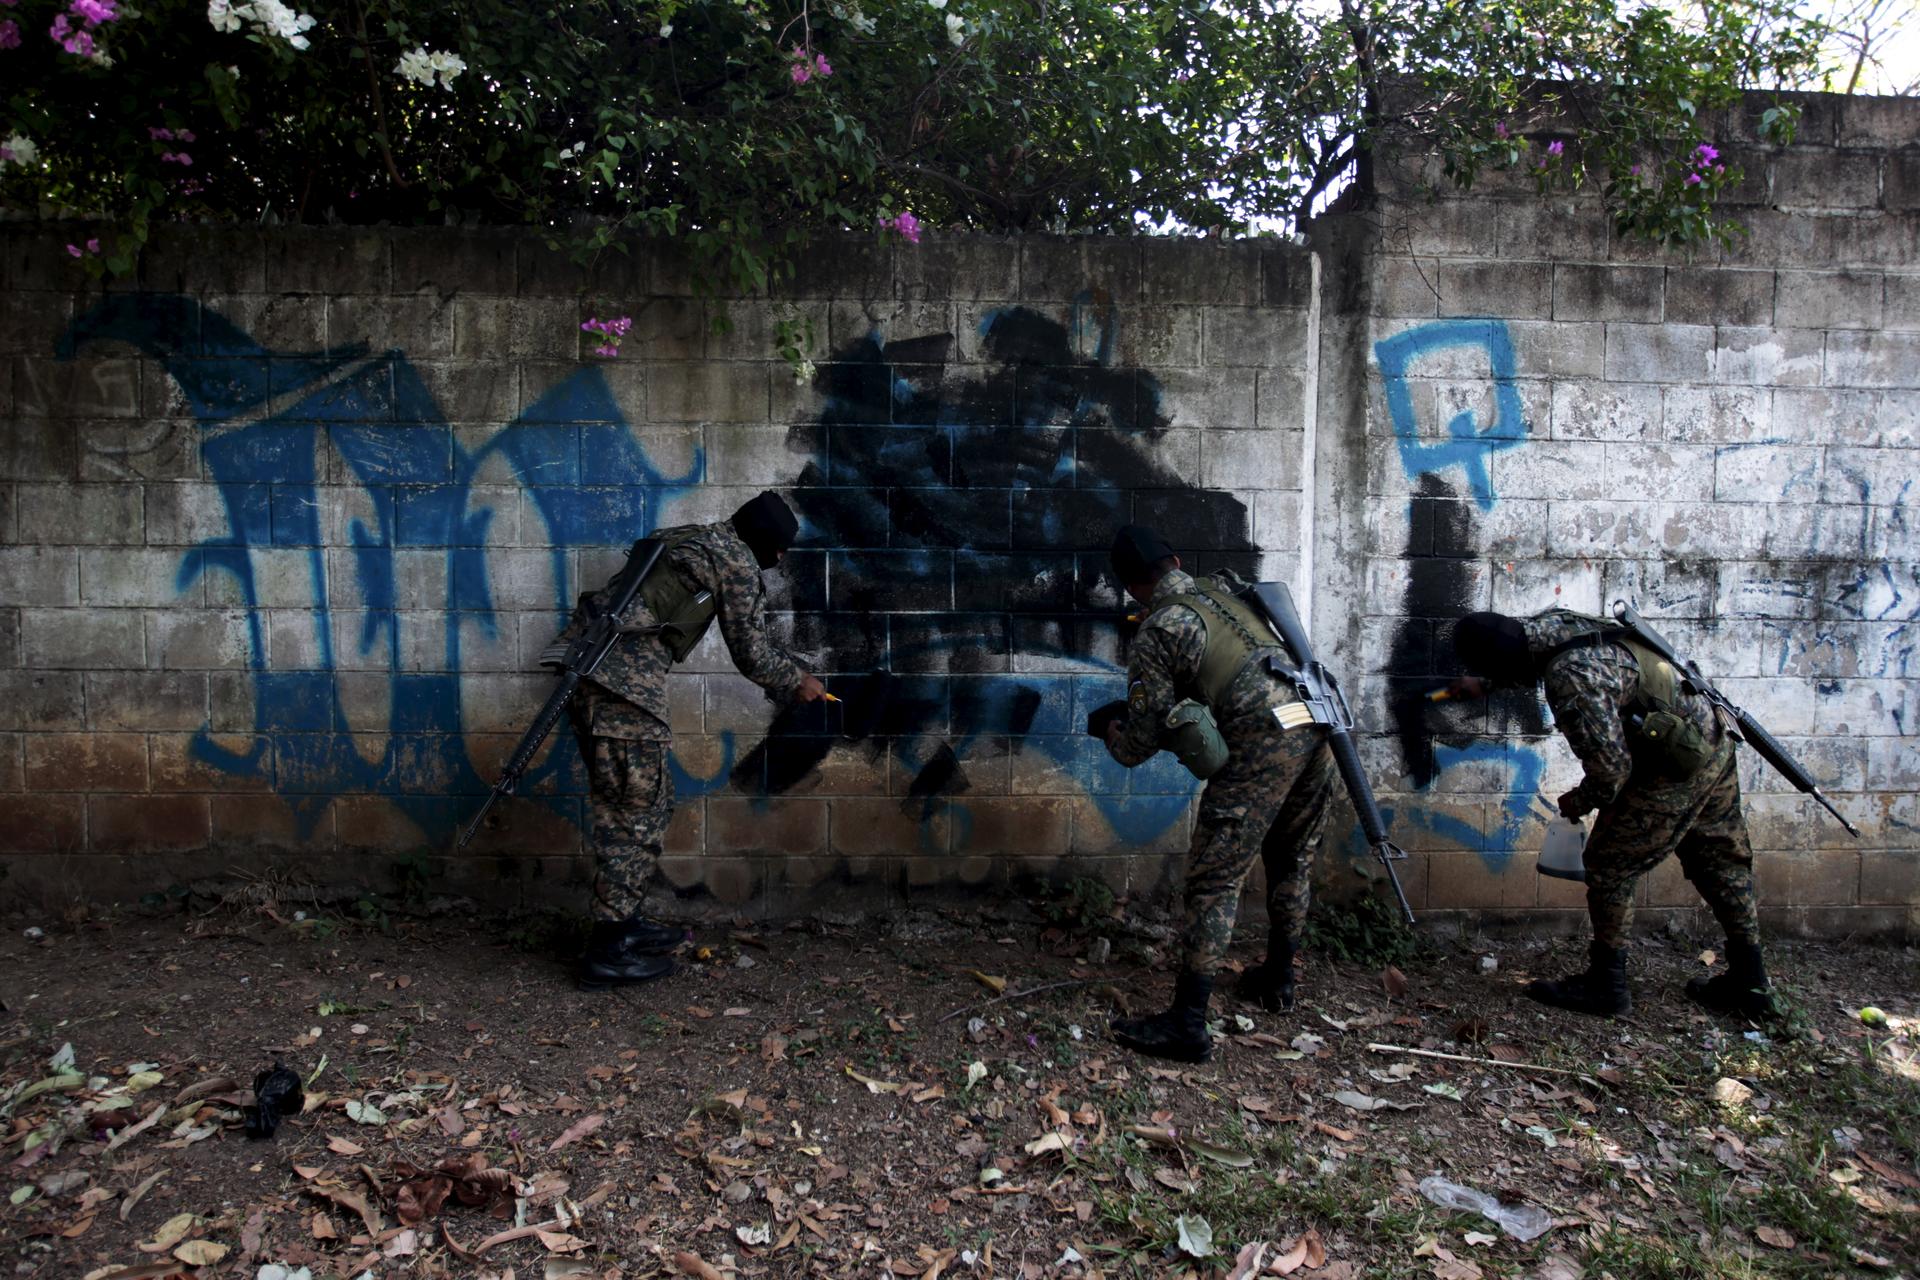 Soldiers paint over graffiti associated with the Mara Salvatrucha gang in El Rosal neighborhood in Quezaltepeque, El Salvador April 4, 2016.